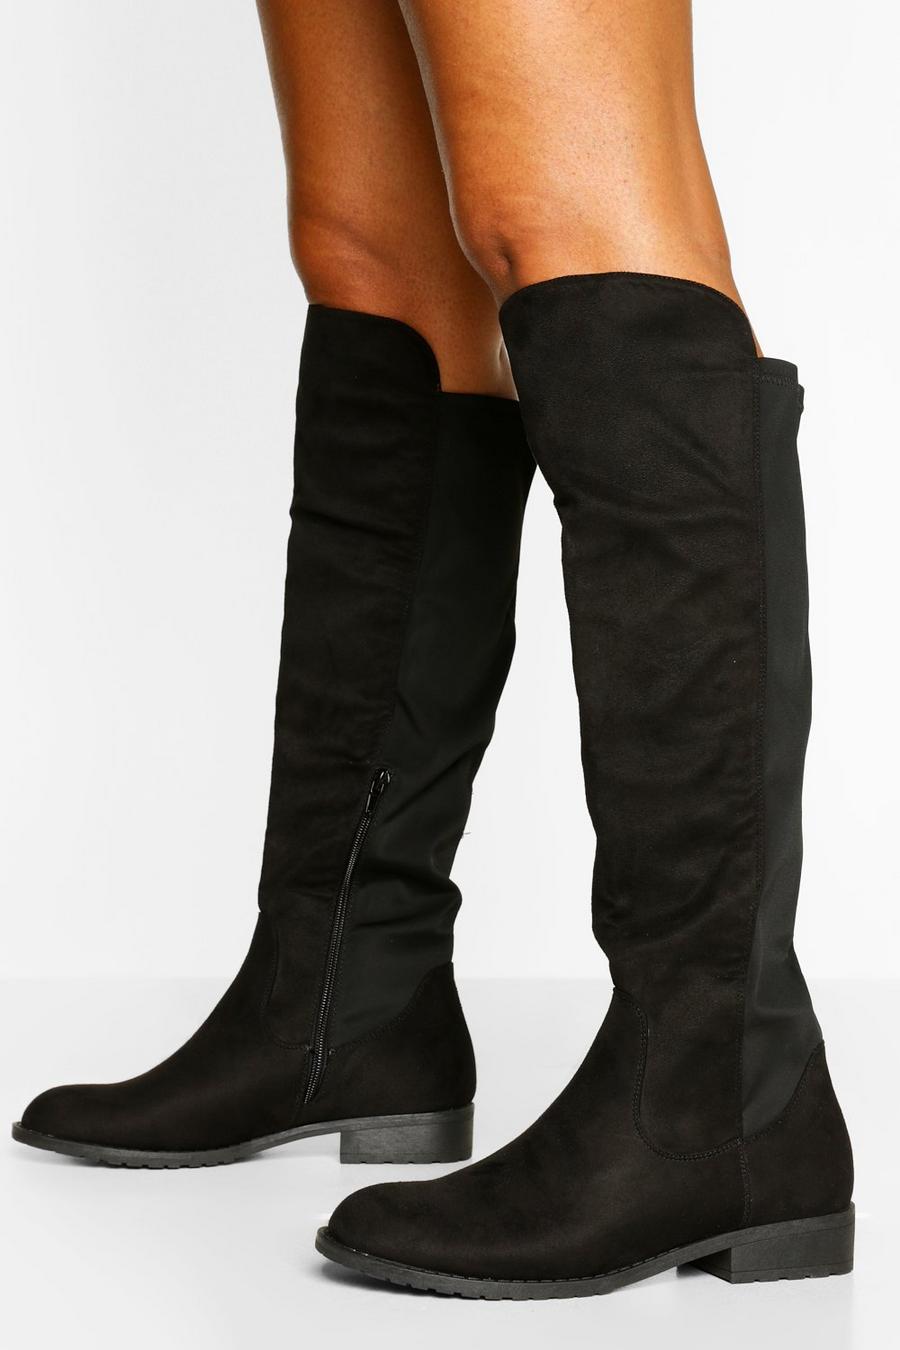 Black nero Wider Calf Knee High Riding Boots